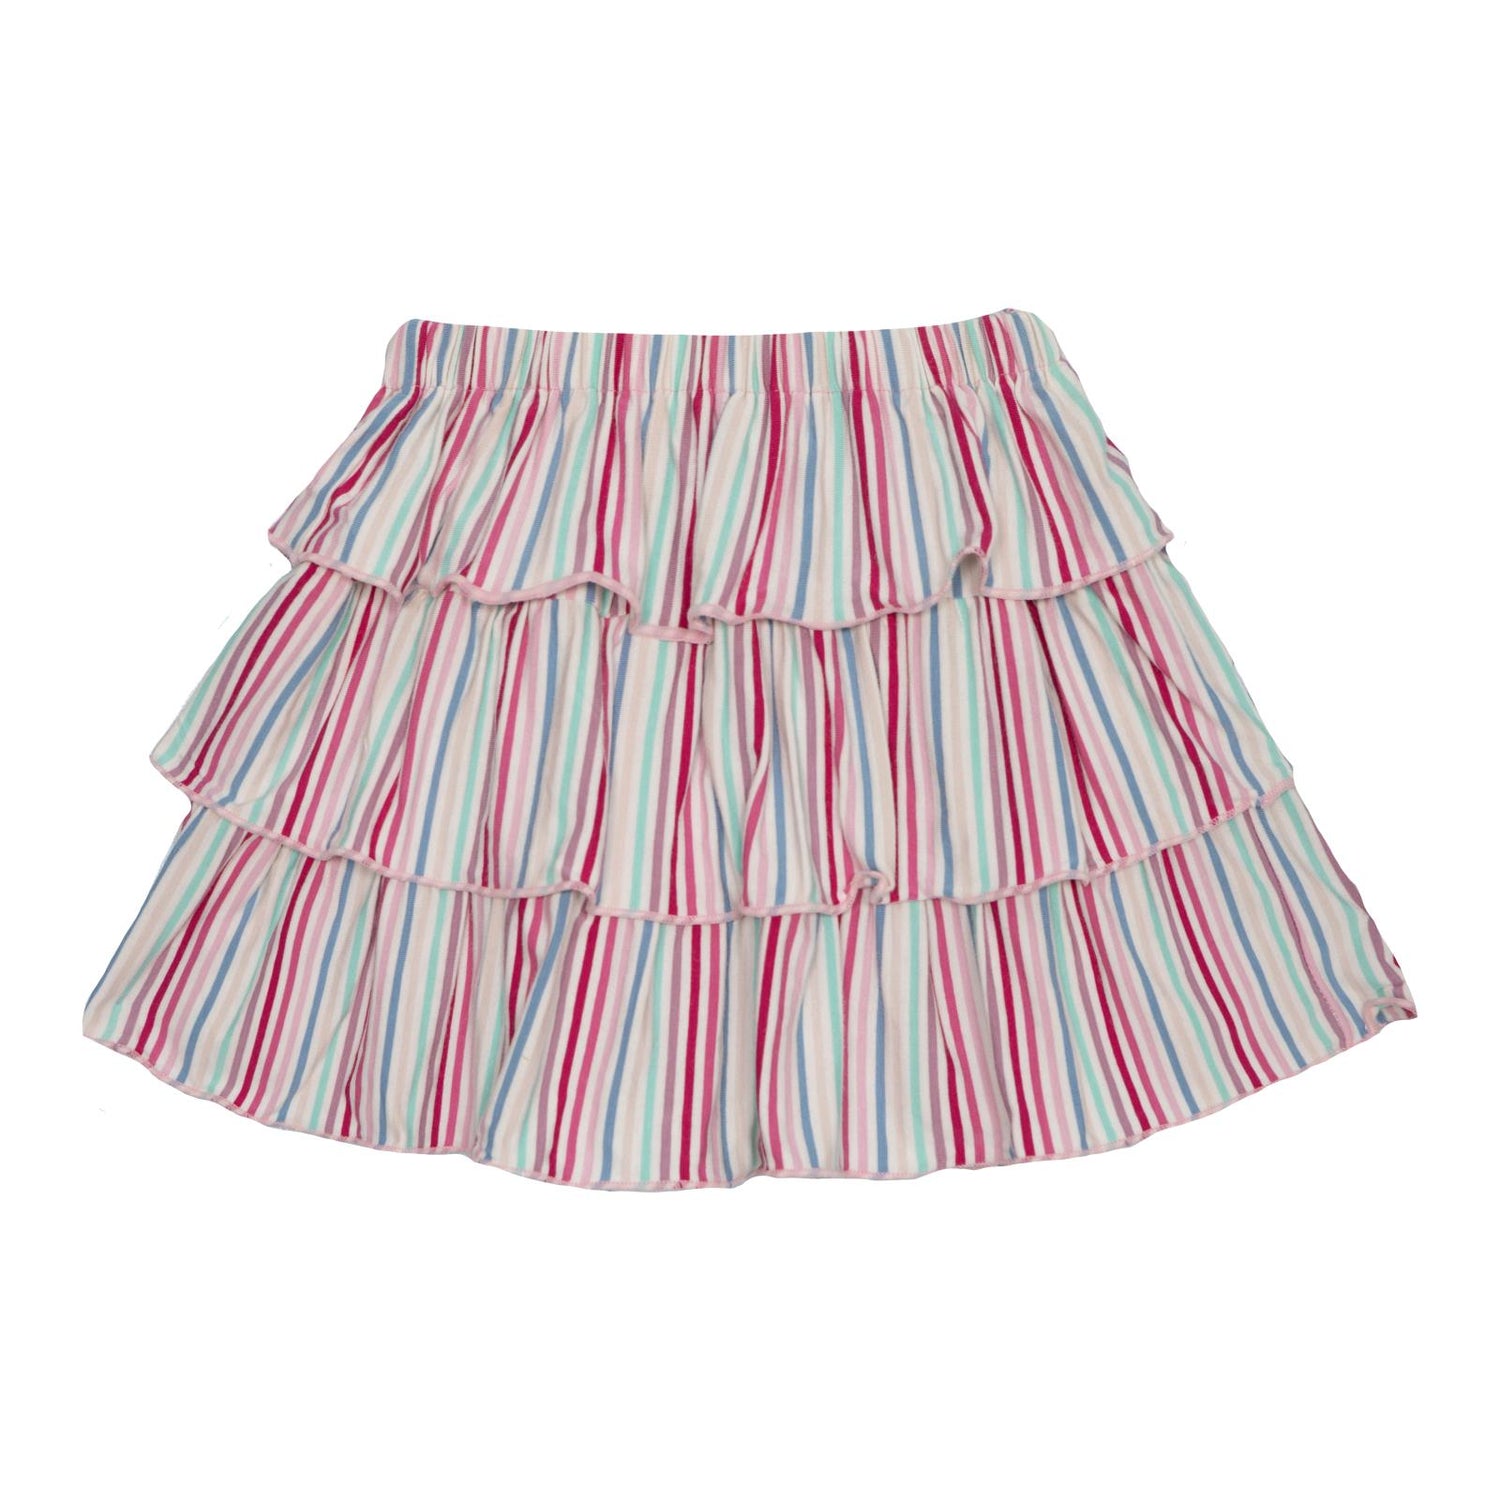 Print Layered Ruffle Skirt in Skip To Make Believe Stripe